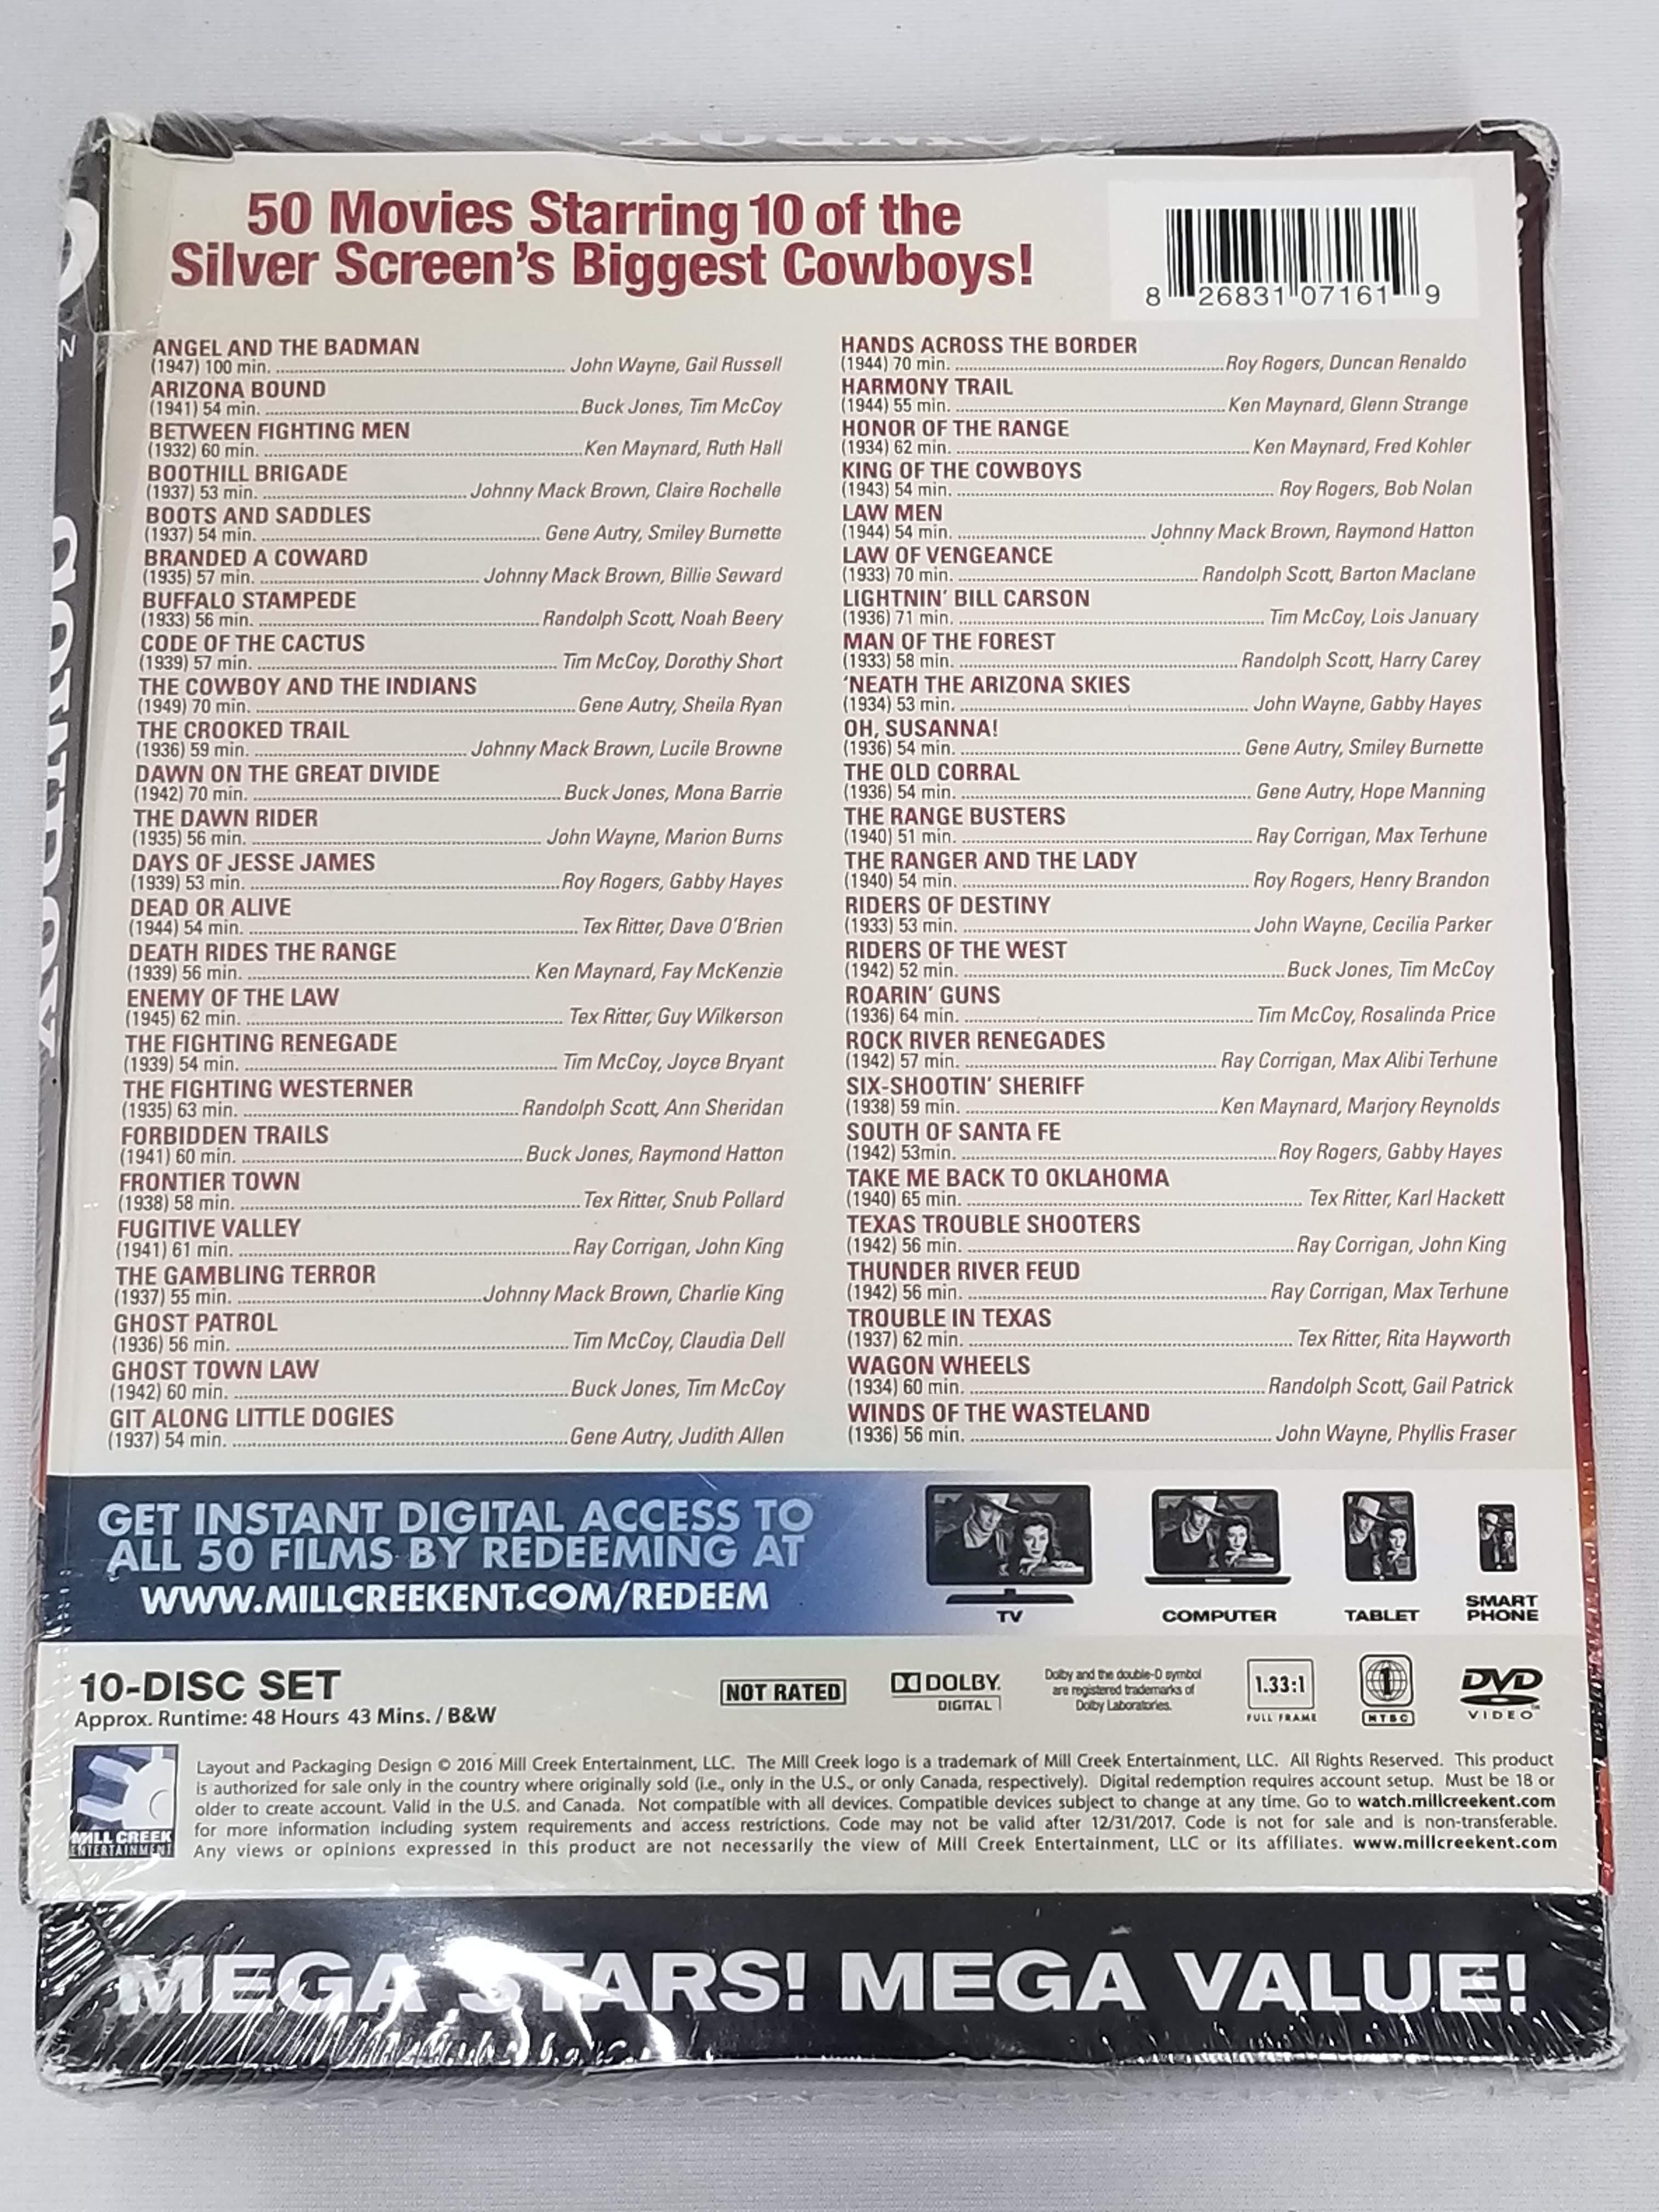 Cowboy Legends 50 Movie Collection (DVD + Digital) - Damaged Box, New